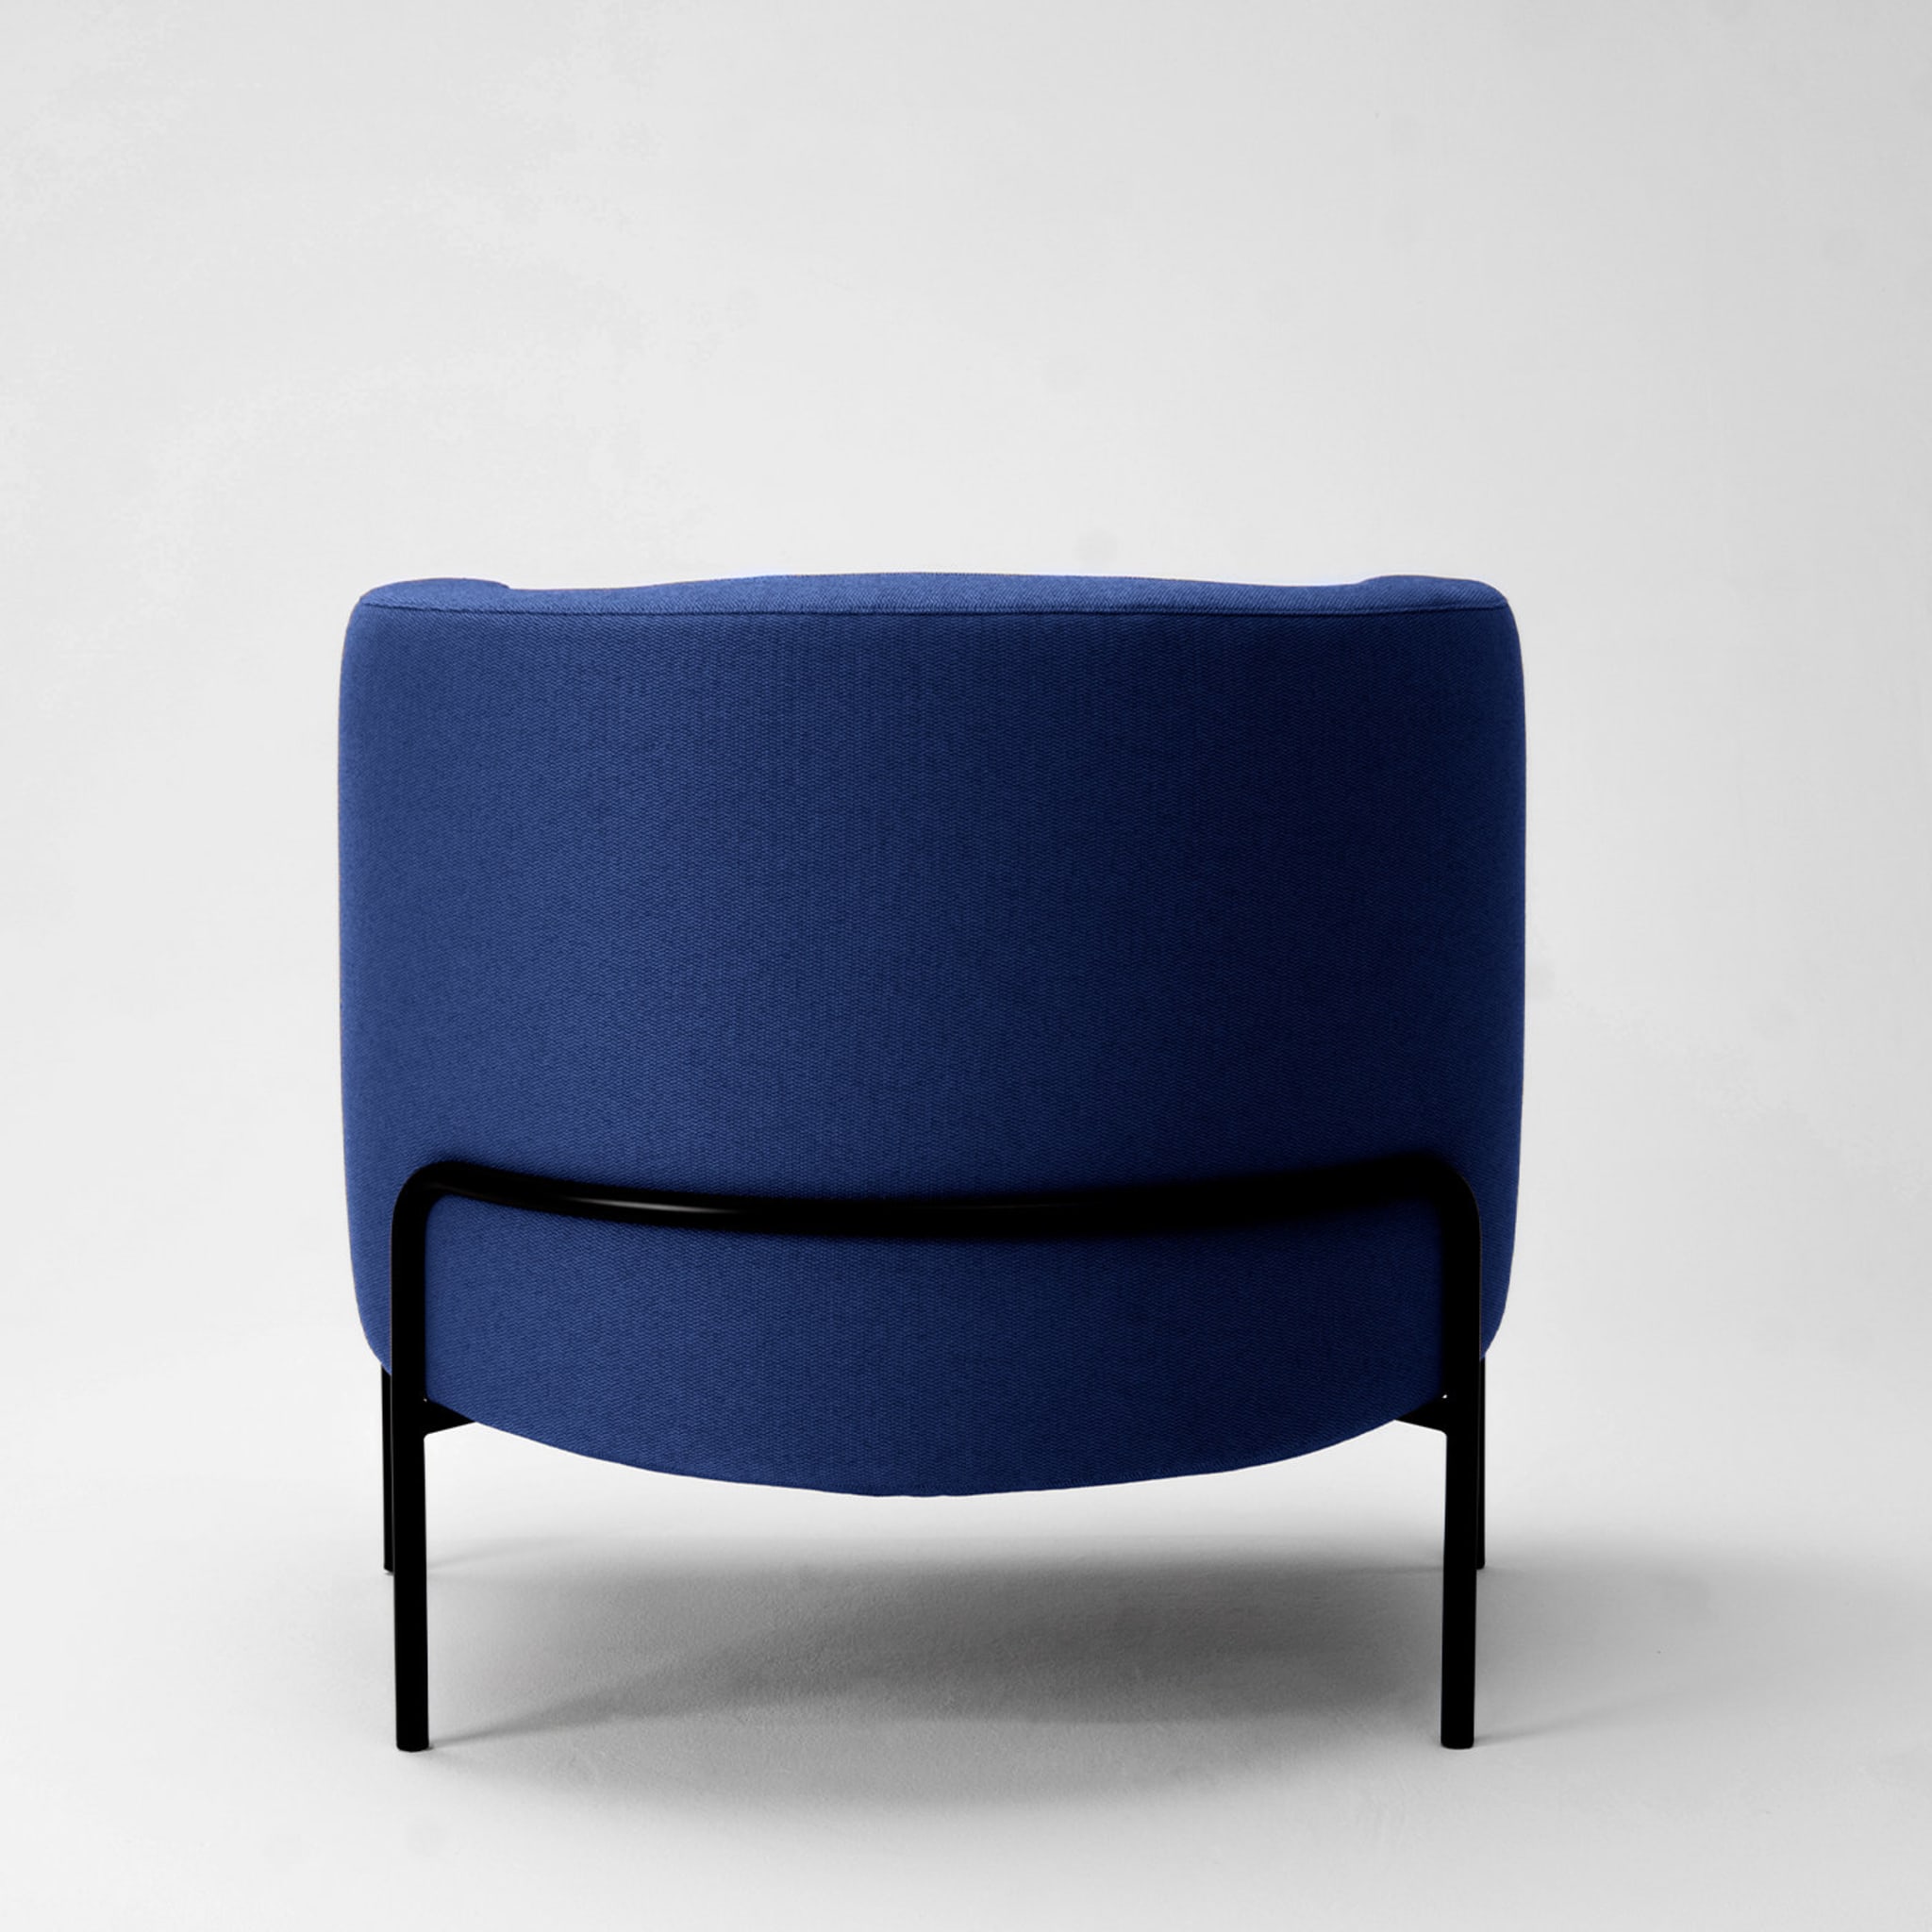 Laetitia Blue Armchair by Fabio Fantolino - Alternative view 2